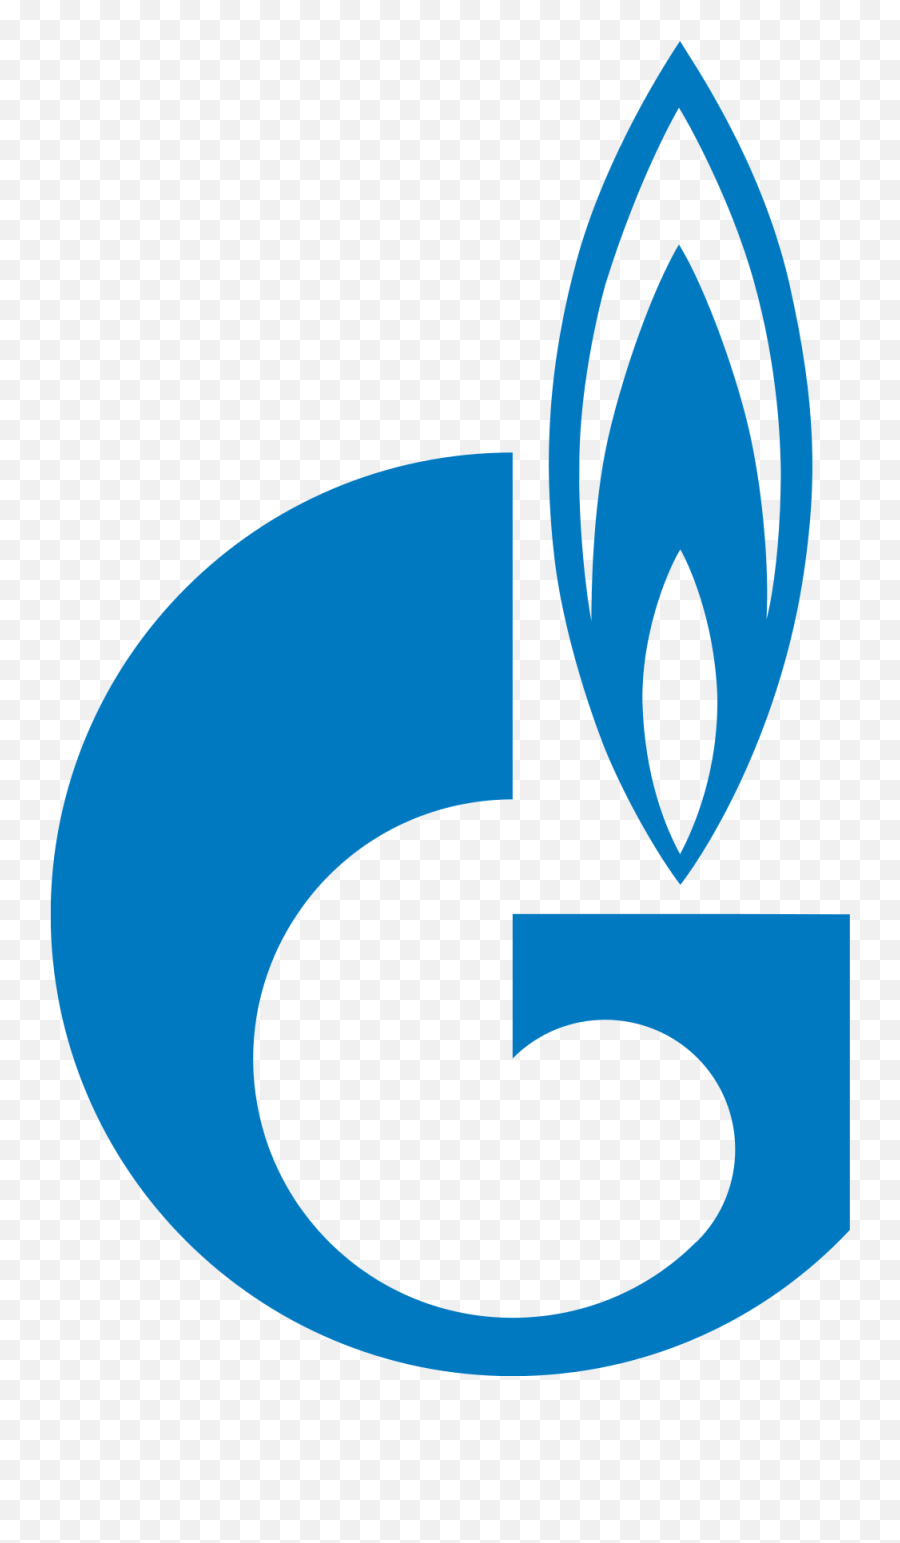 Gazprom Icon Logo Download In Svg Or Png Format - Logosarchive Gazprom Logo,Icon Image Format